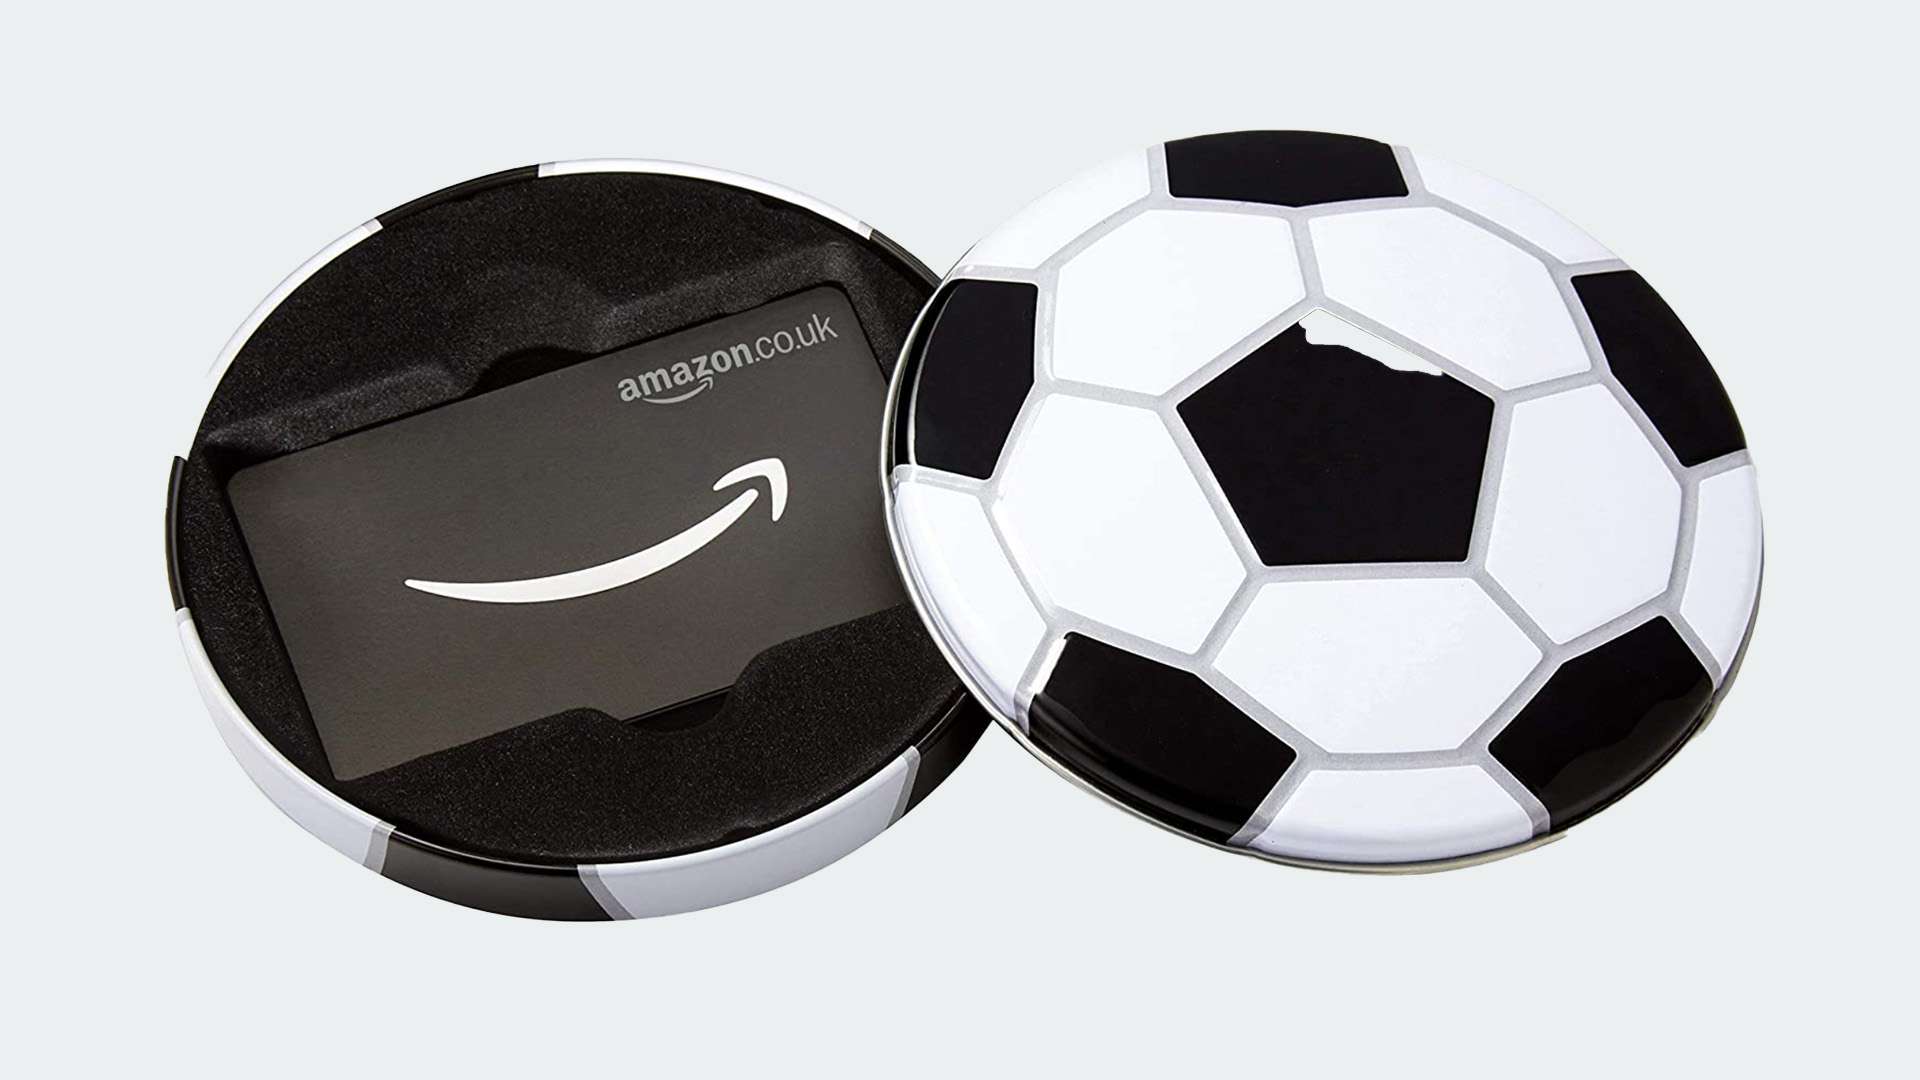 Amazon.co.uk Gift Card in a football tin